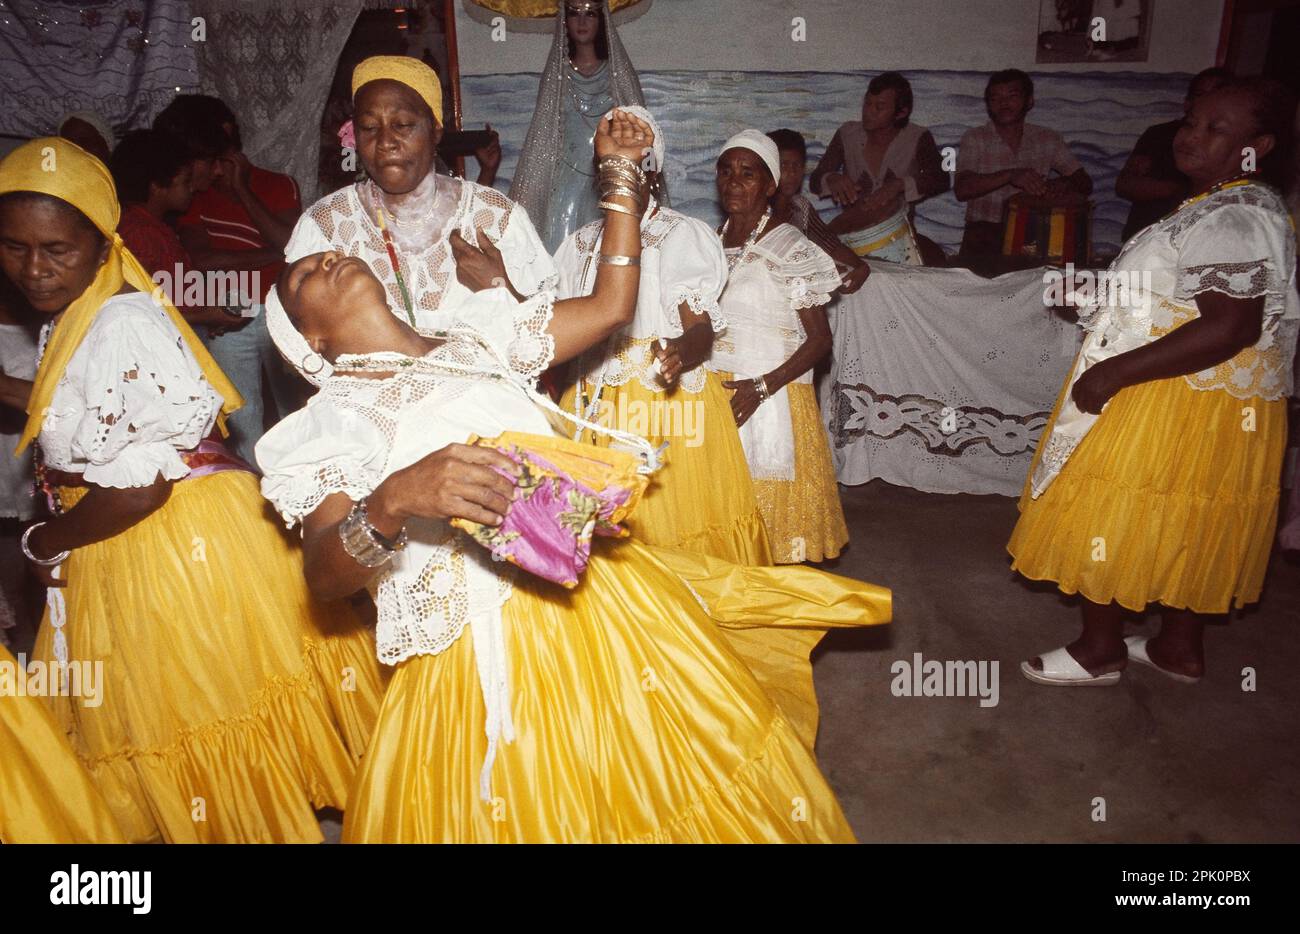 Tambor de Mina, syncretic Afro-Brazilian spirit possession religion. A 'filha de santo' (cult member) goes into a trance, possessed by a spirit. Stock Photo